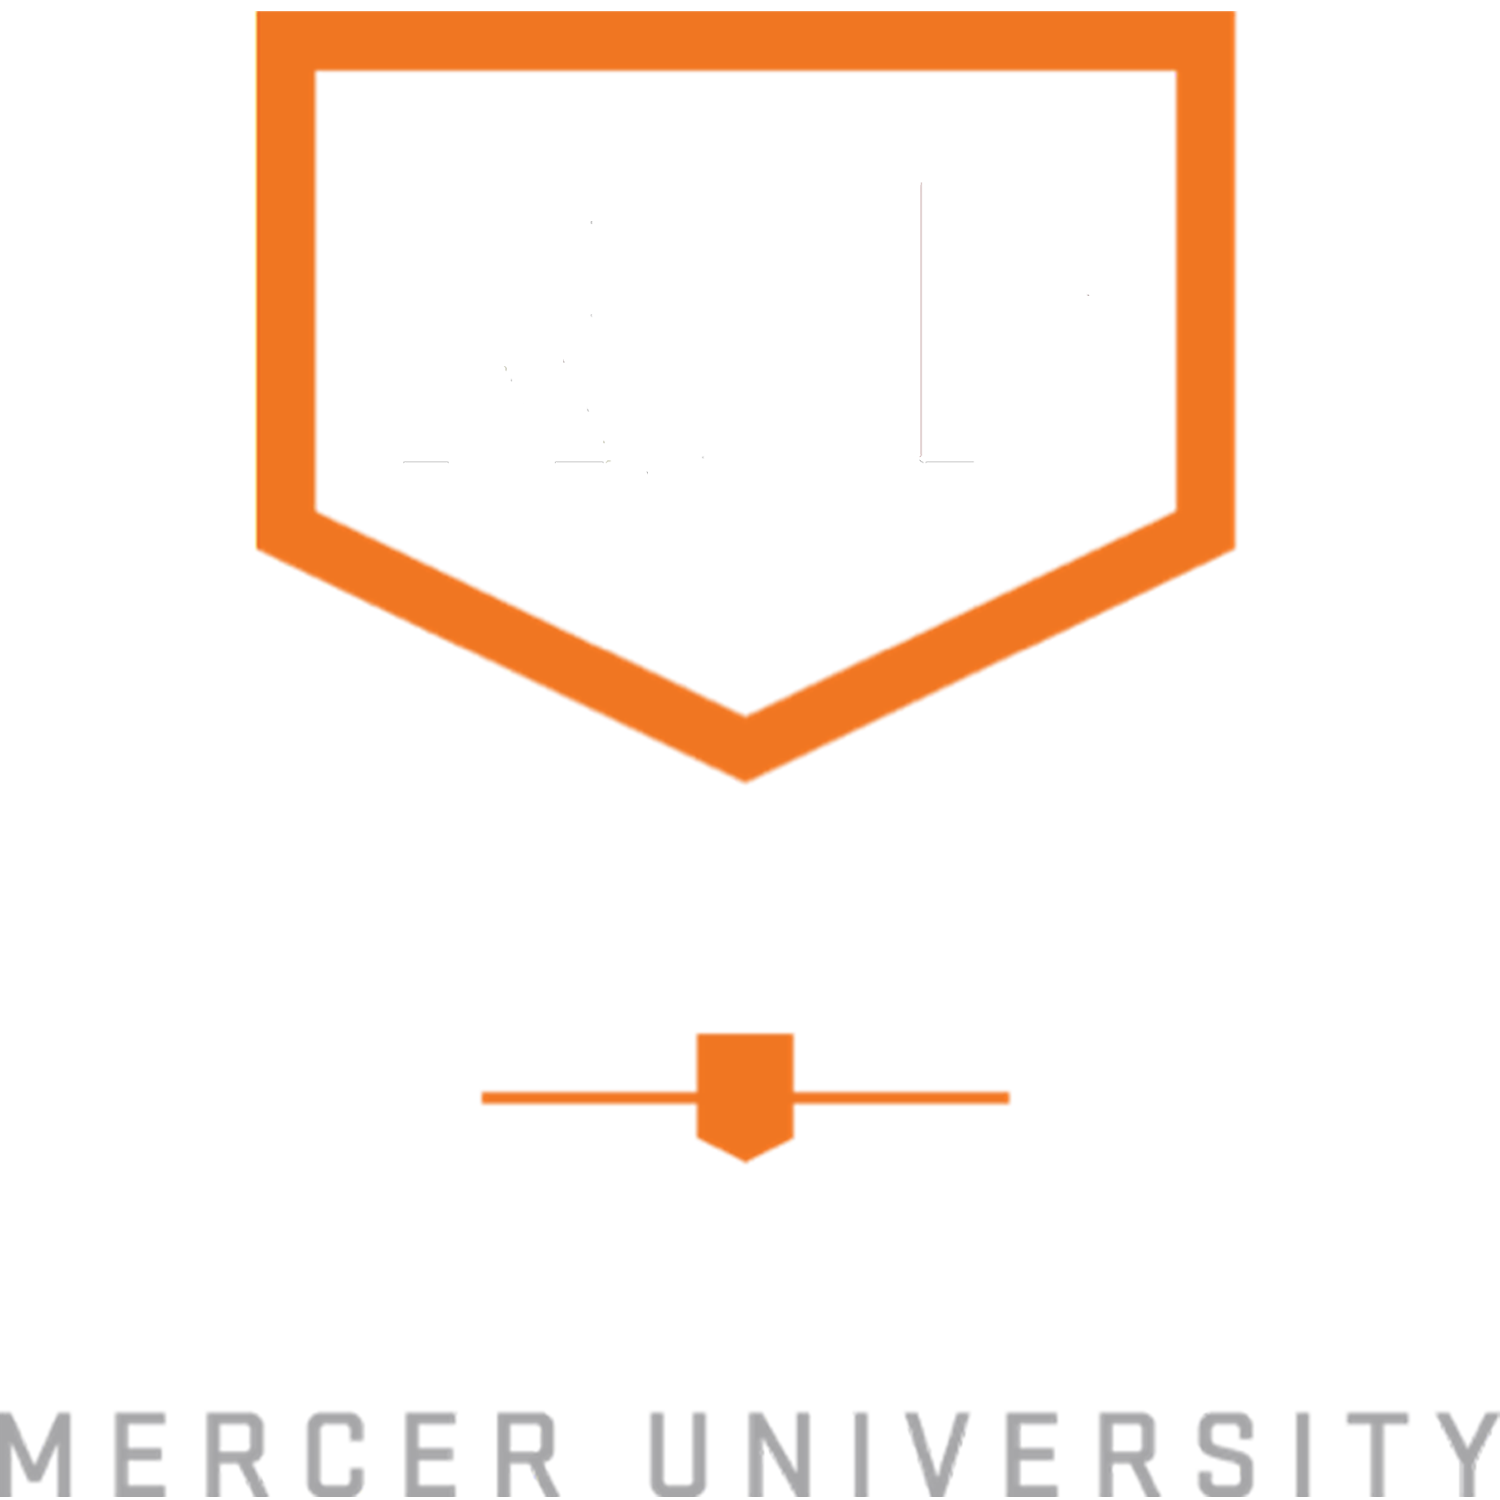 RUF at Mercer University